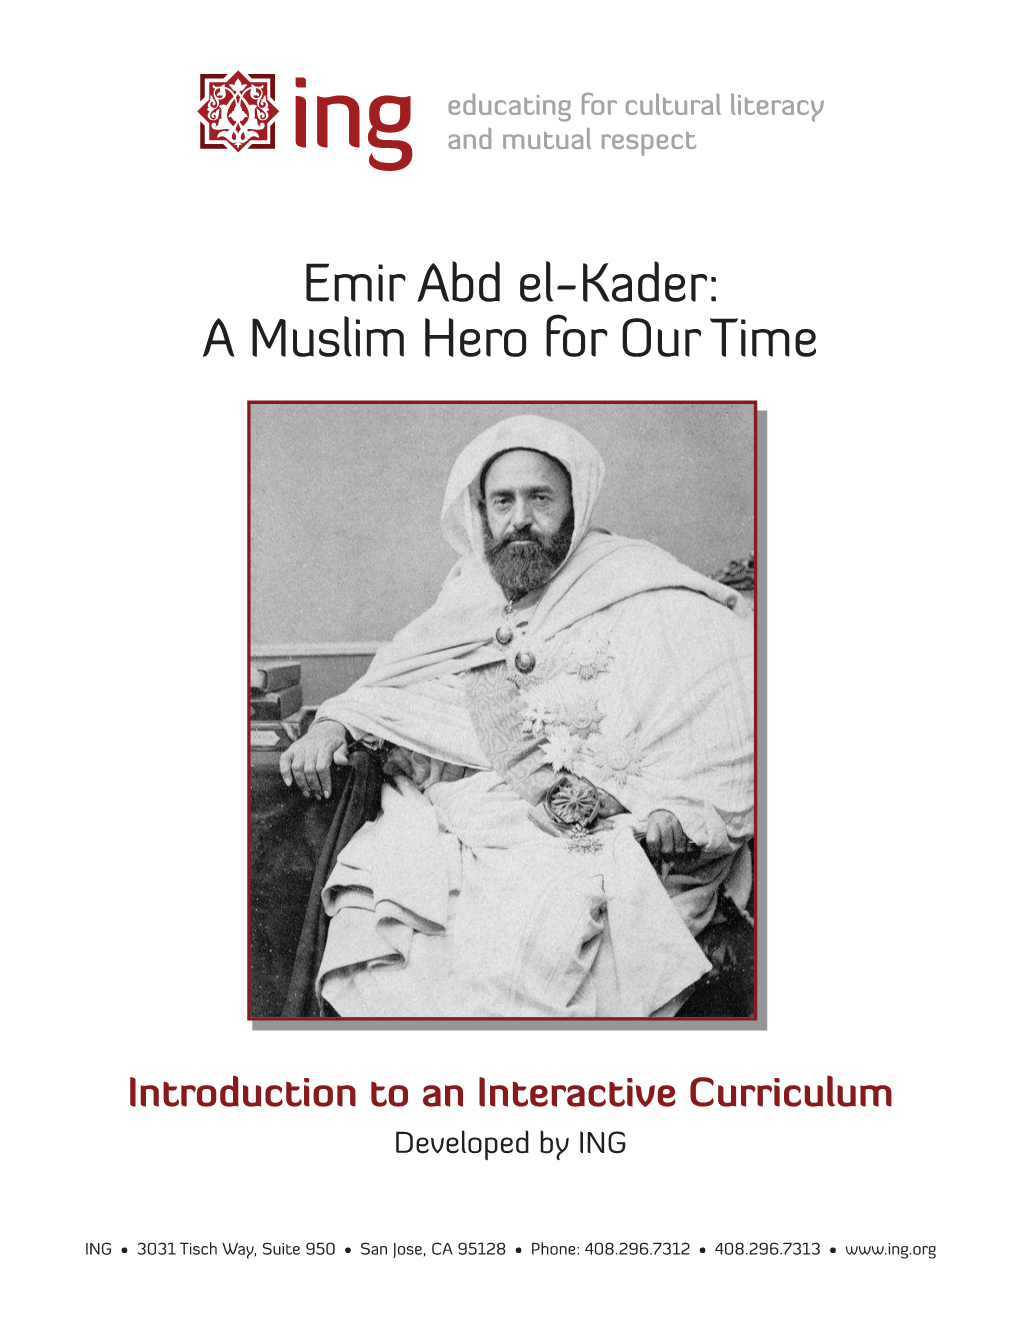 Emir Abd El-Kader: a Muslim Hero for Our Time